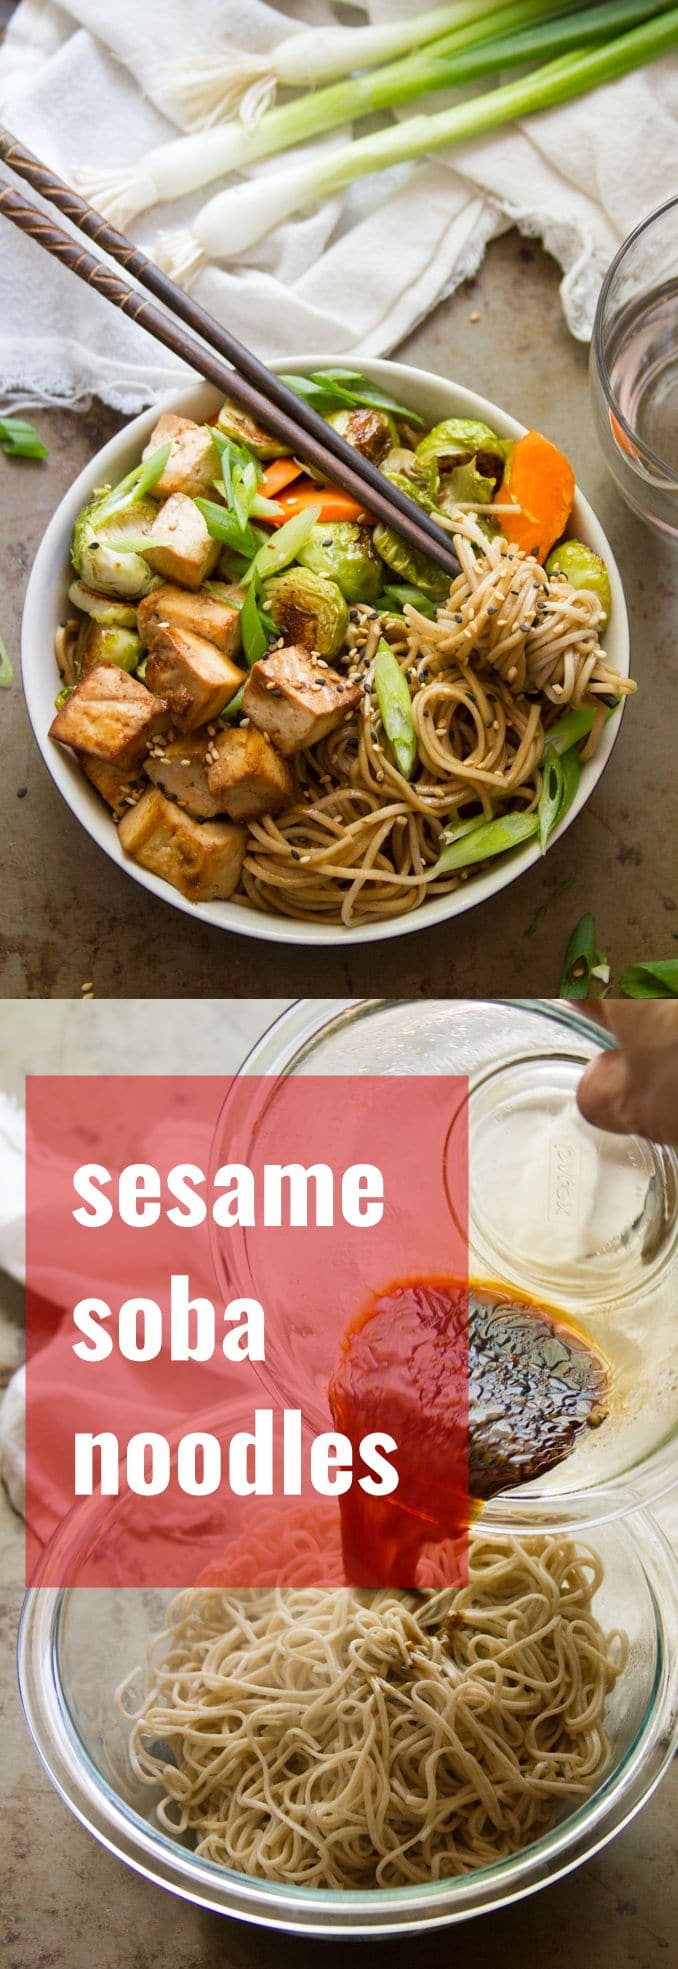 Sesame Soba Noodles with Roasted Veggies & Baked Tofu